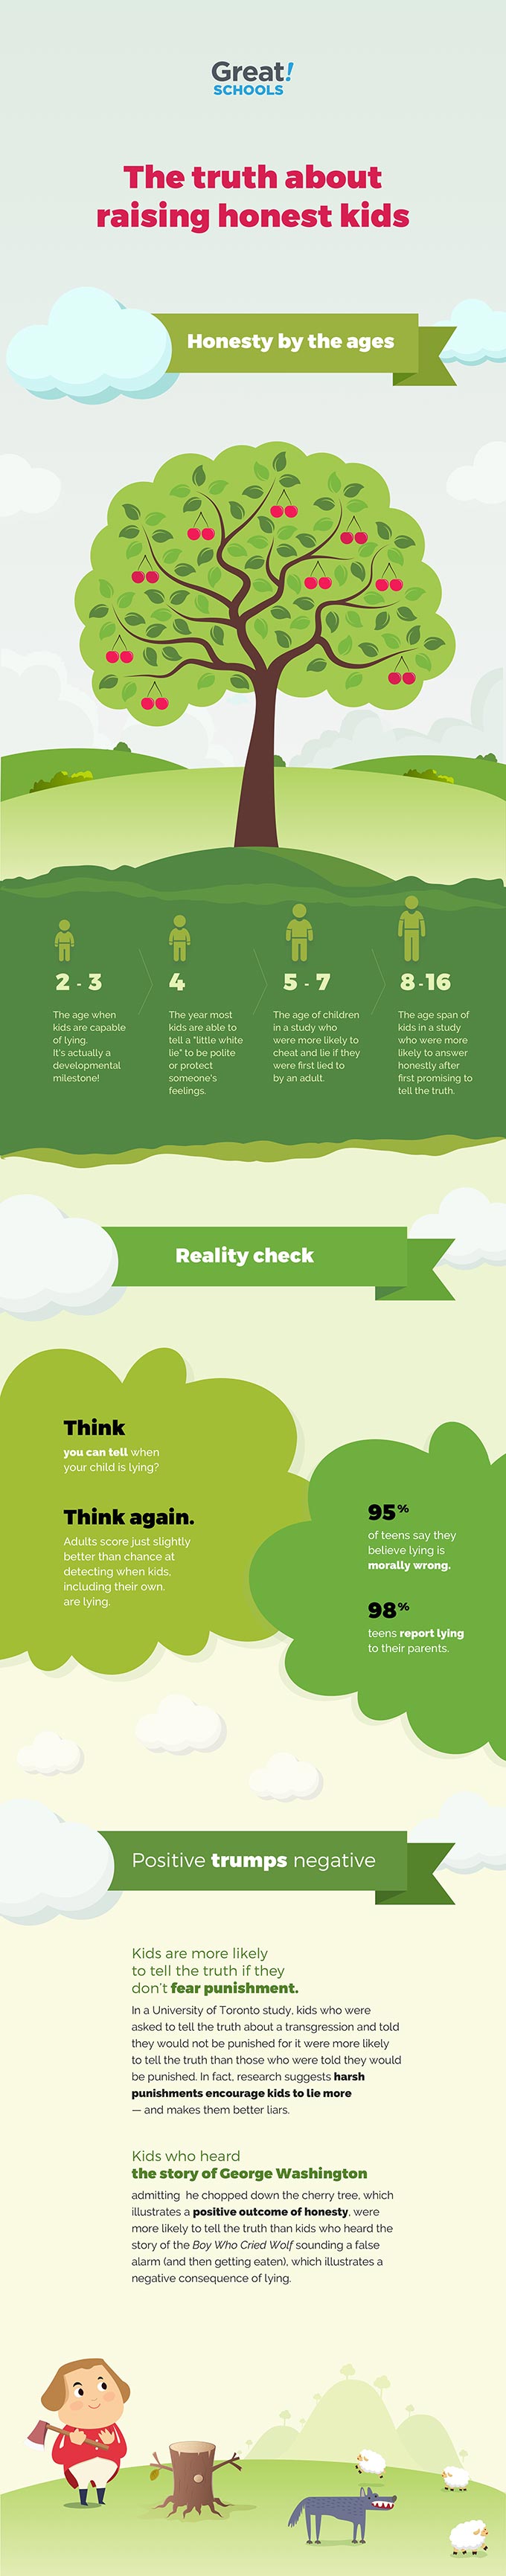 infographic-raising-honest-kids